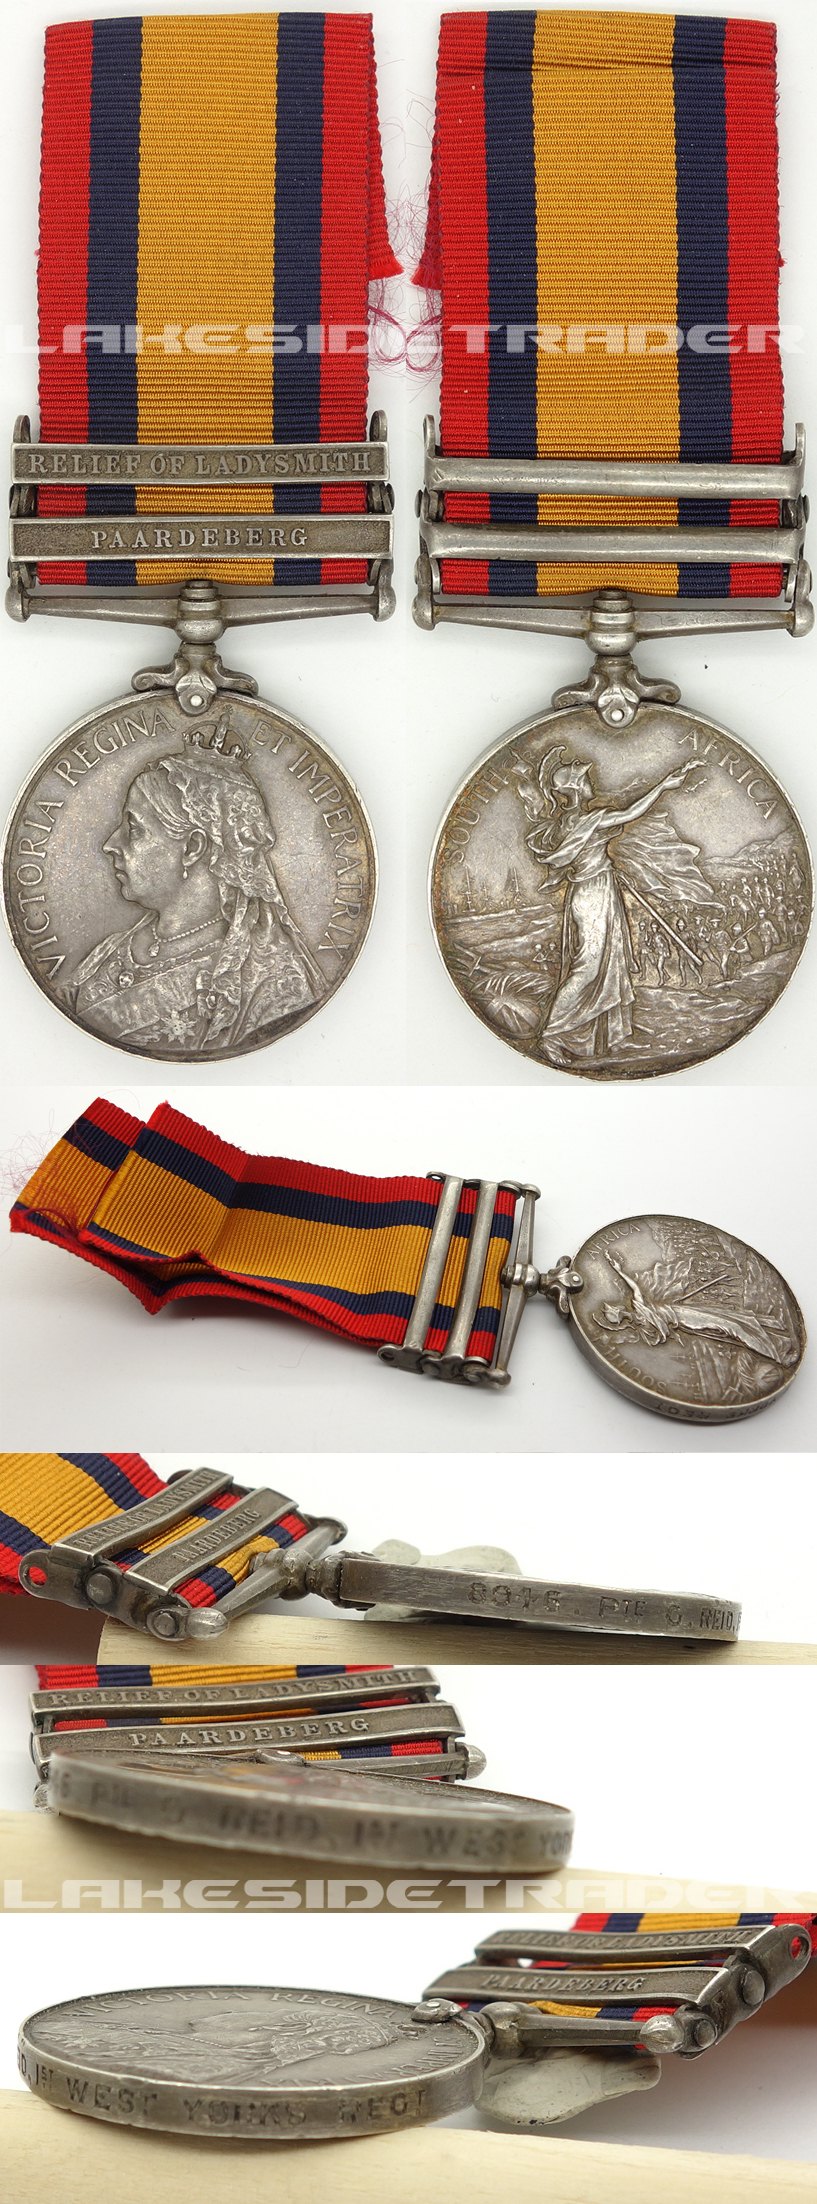 3 bar Queen’s South Africa Medal 1899